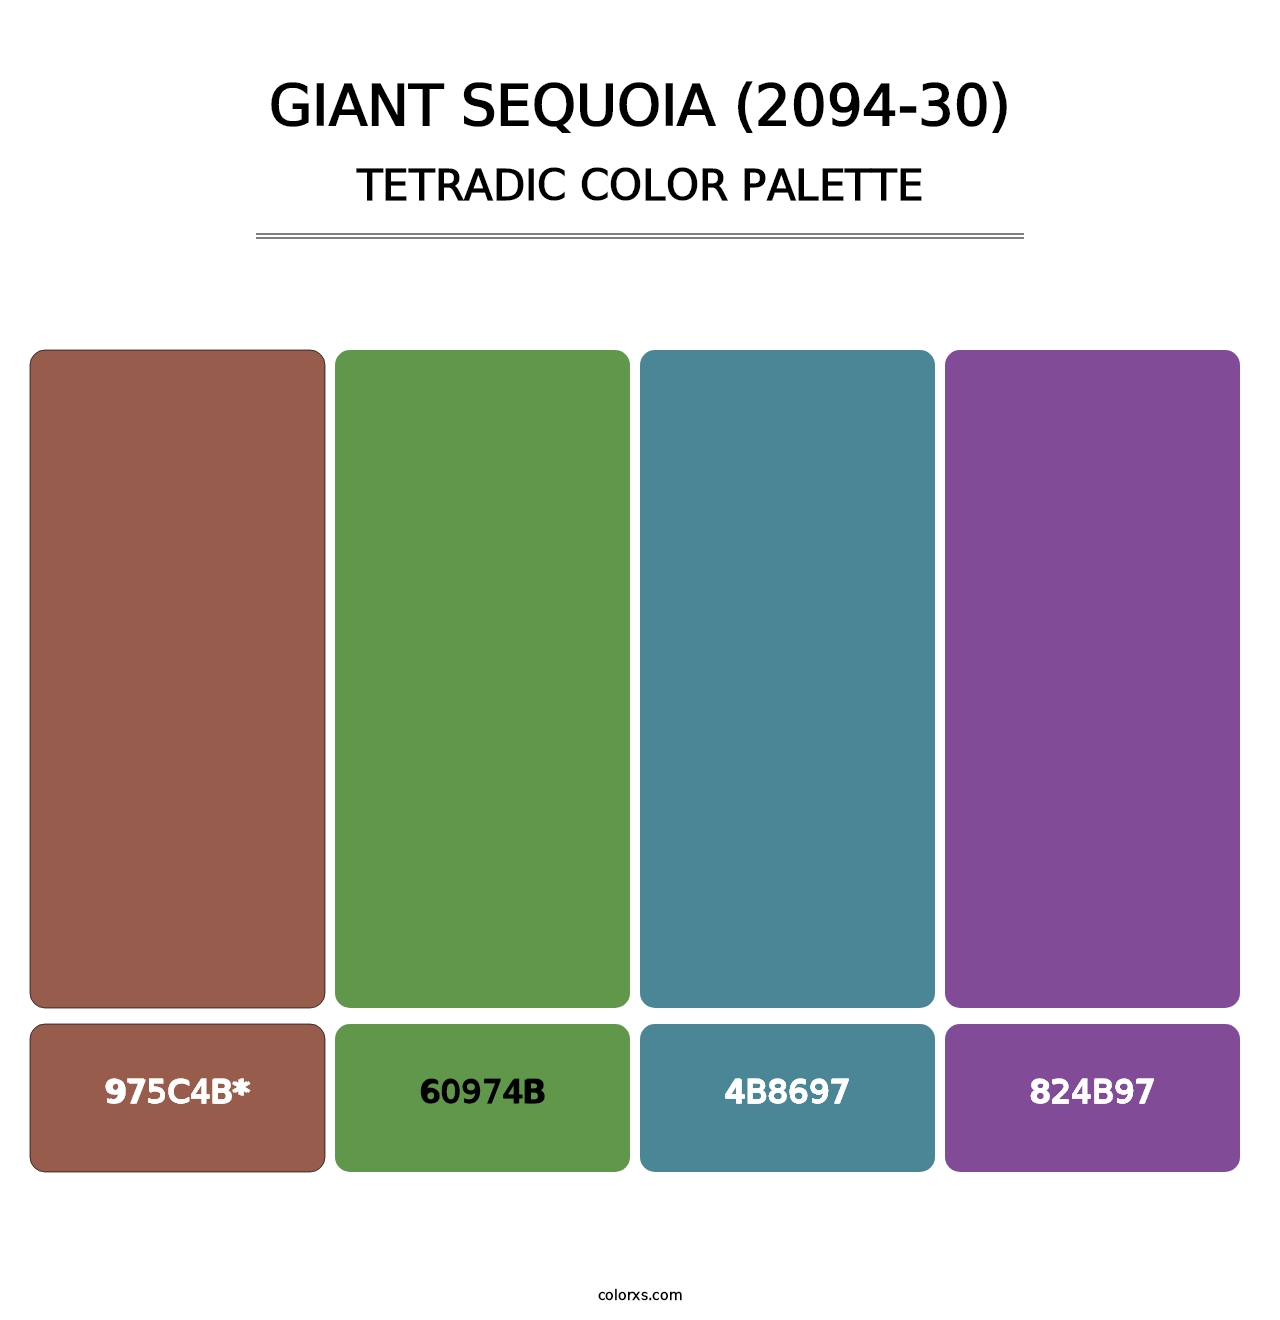 Giant Sequoia (2094-30) - Tetradic Color Palette